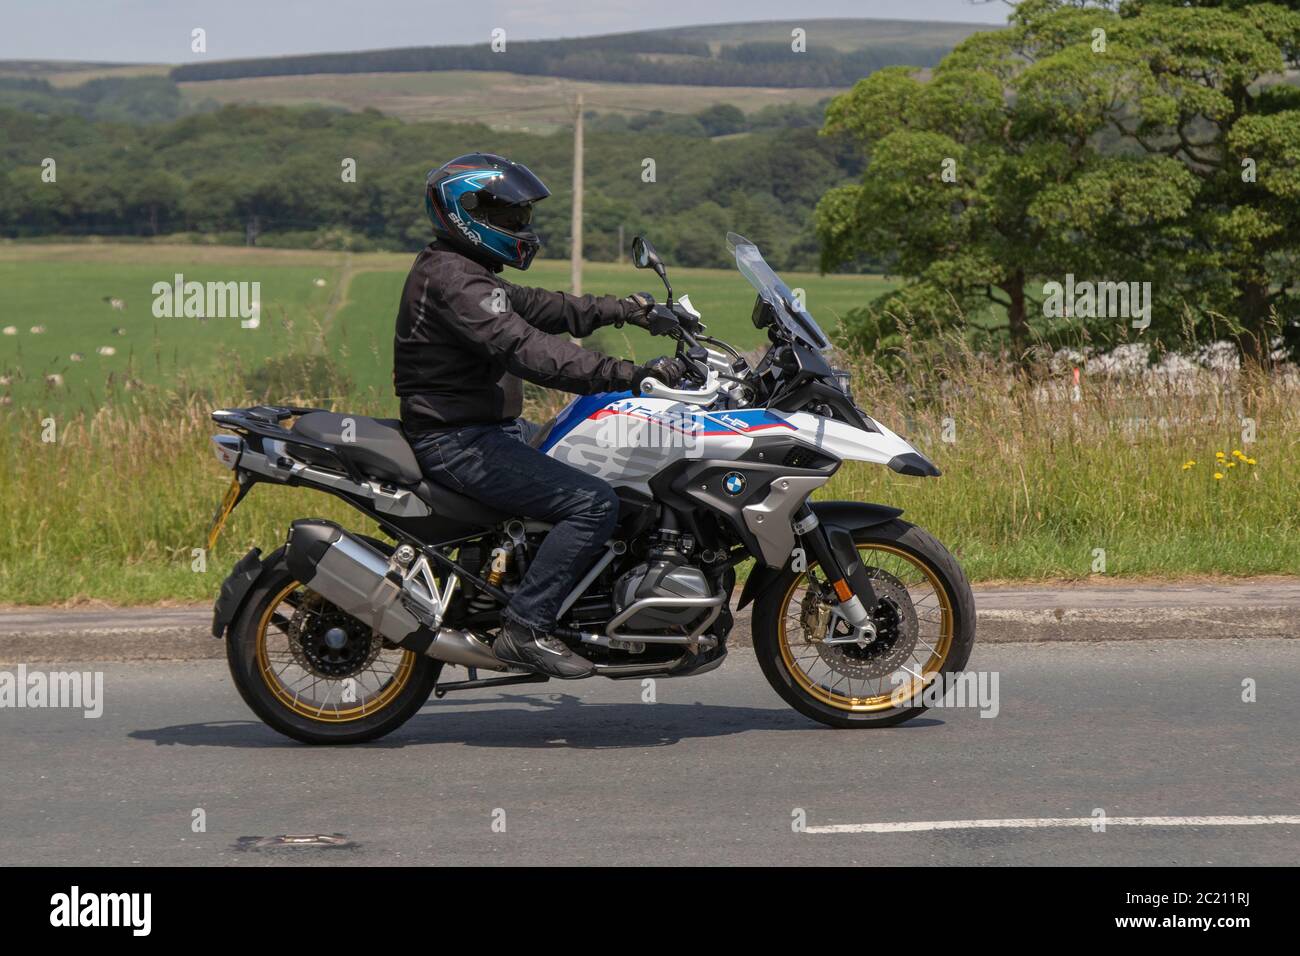 https://c8.alamy.com/comp/2C211RJ/bmw-r-1250-gs-rallye-te-motorbike-rider-two-wheeled-transport-motorcycles-vehicle-roads-motorbikes-bike-riders-motoring-in-chorley-uk-2C211RJ.jpg